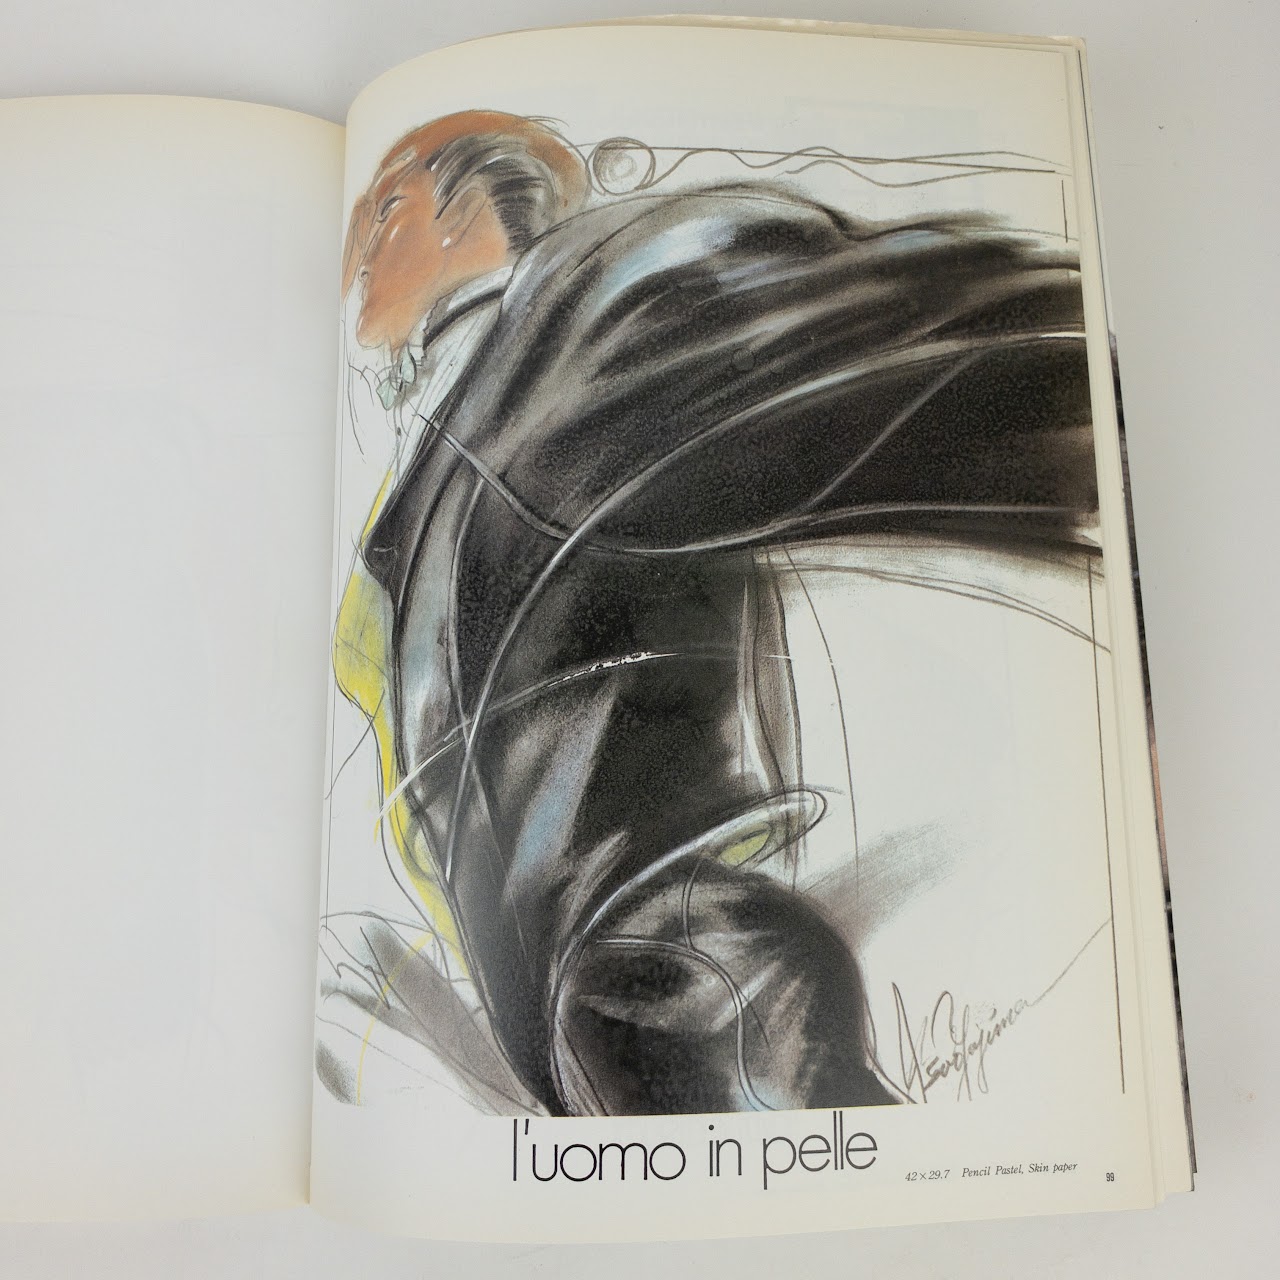 Isao Yajima 1980s "Figure Drawing for Fashion" Book